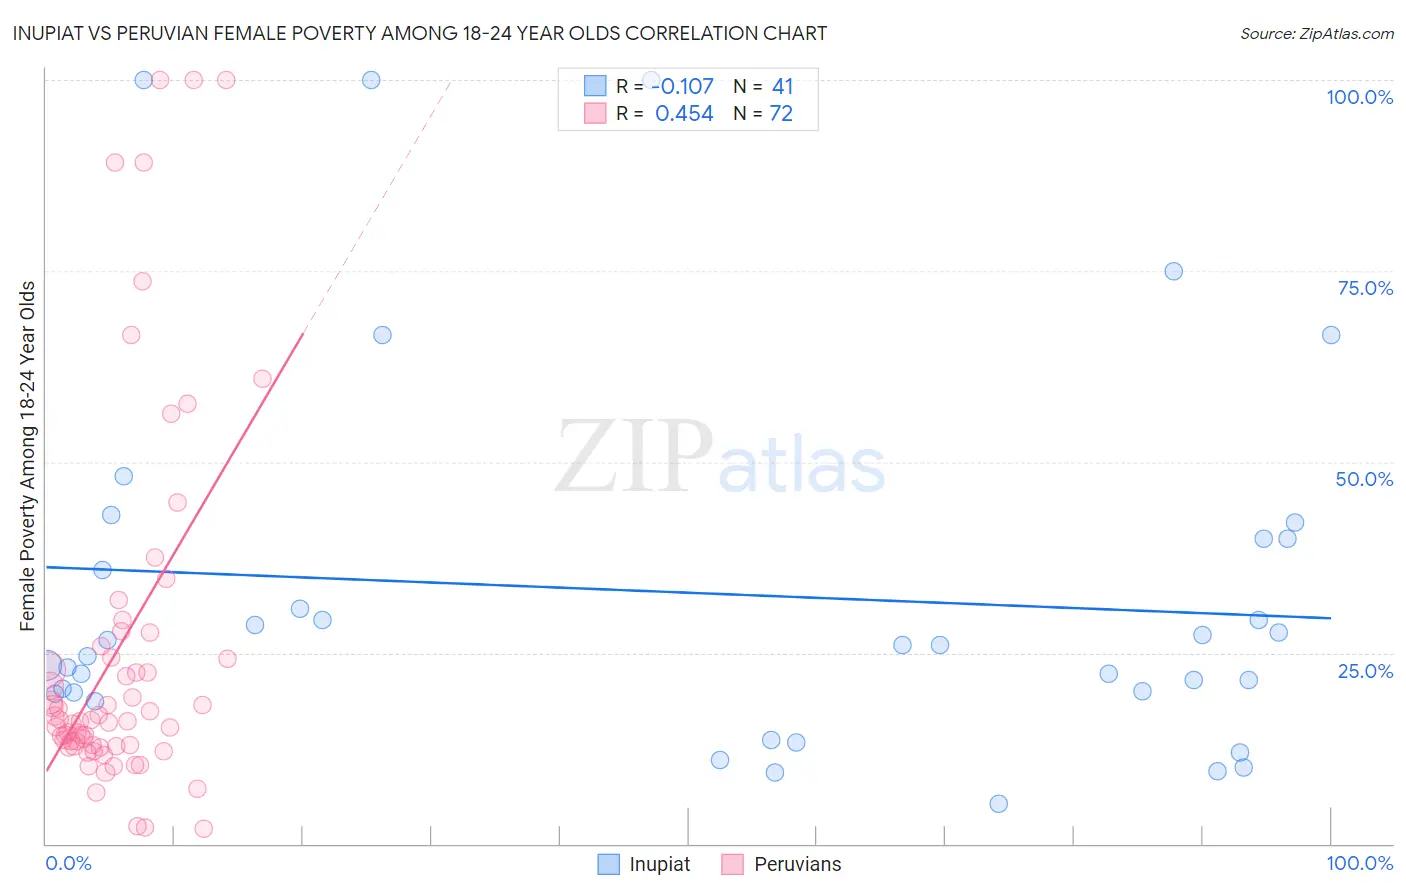 Inupiat vs Peruvian Female Poverty Among 18-24 Year Olds